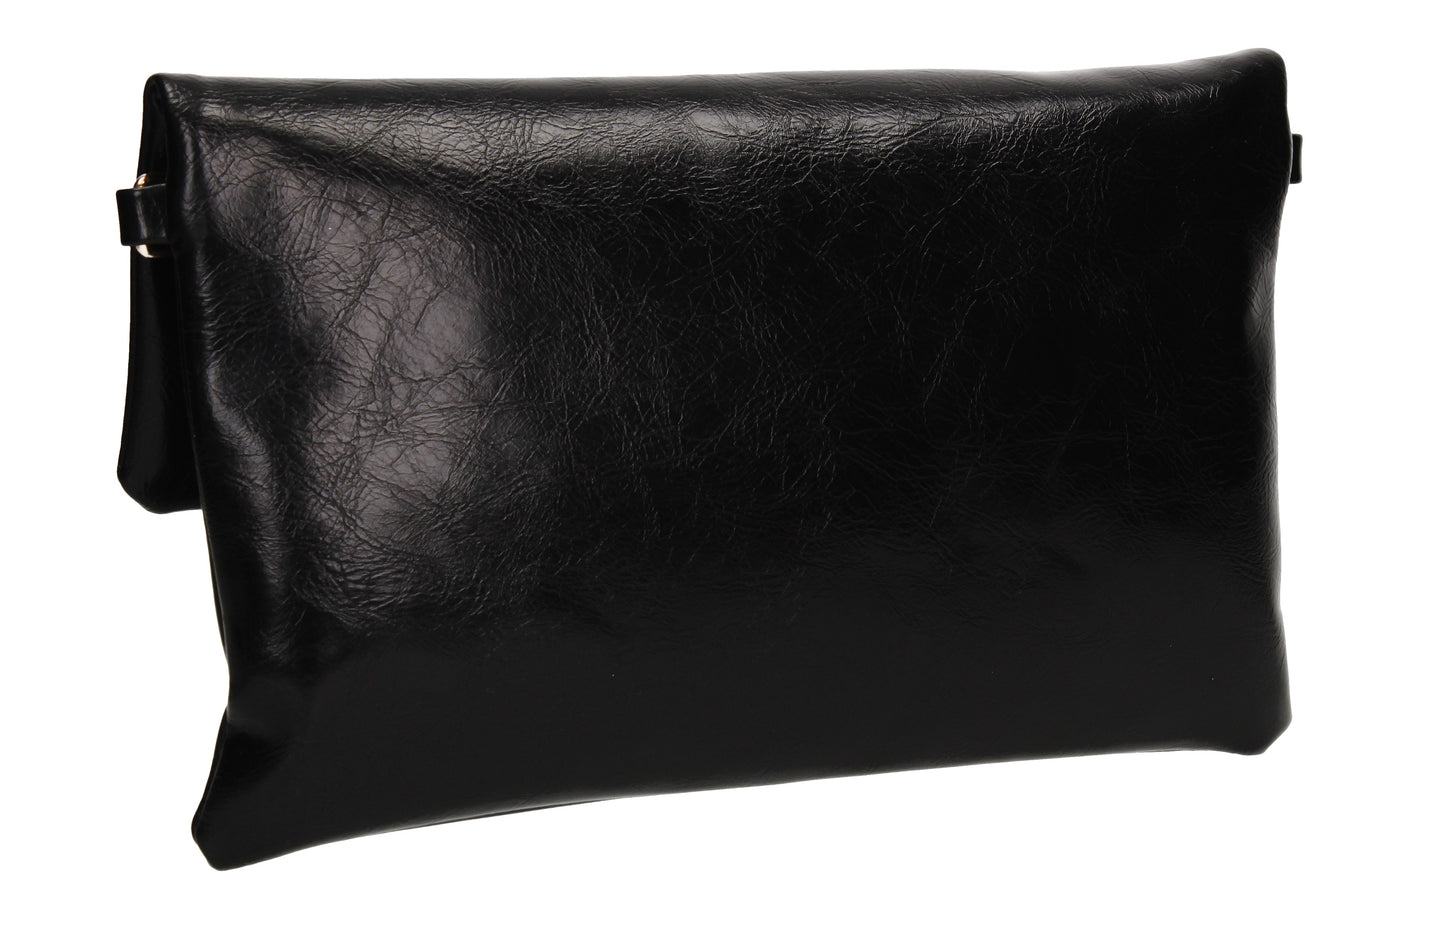 Callie Faux Leather Animal Print Elegant Clutch Bag Black